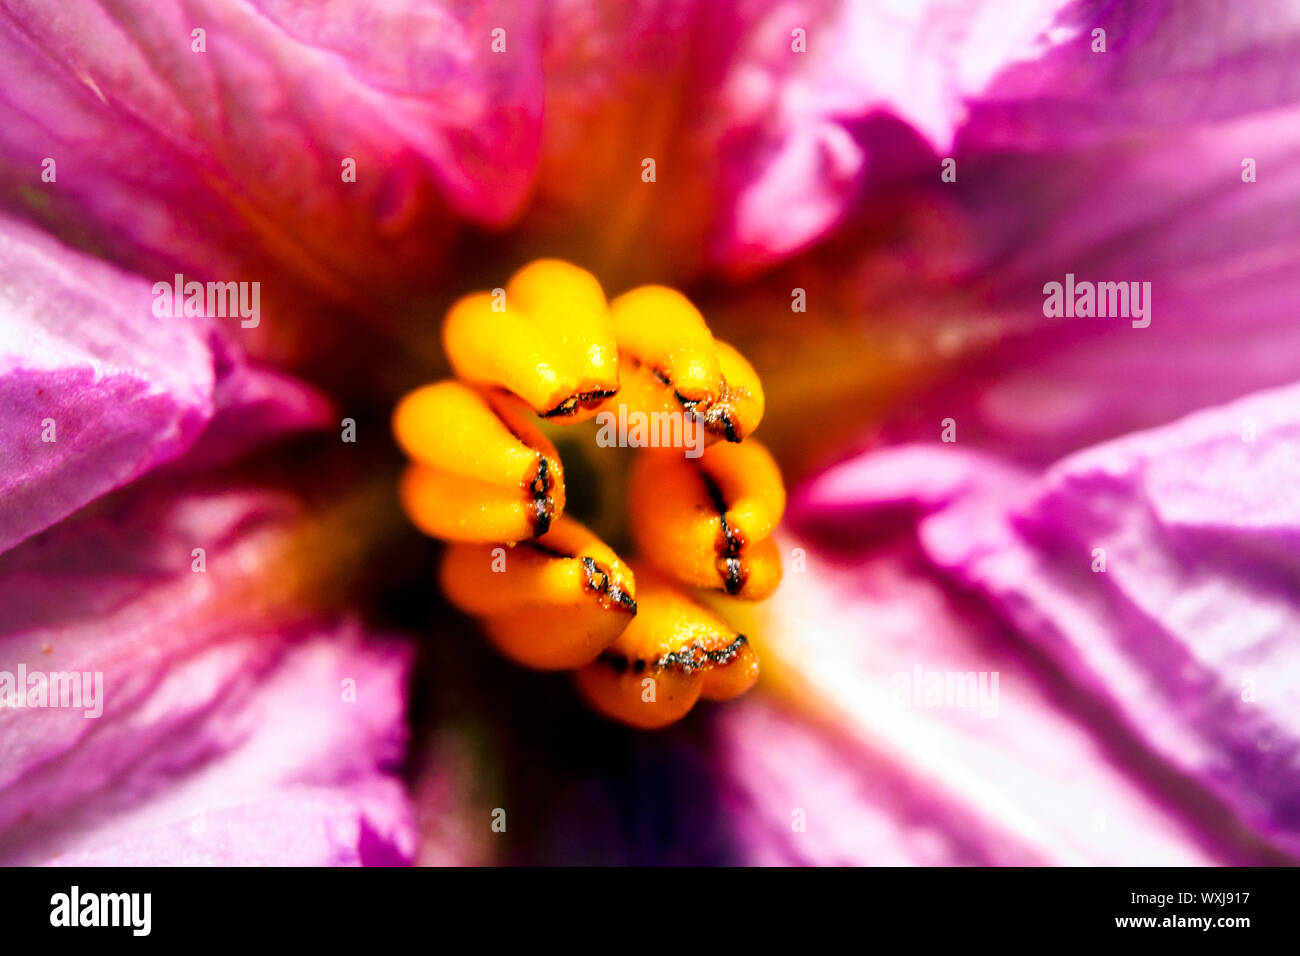 Aubergine flower (Solanum melongena) Stock Photo